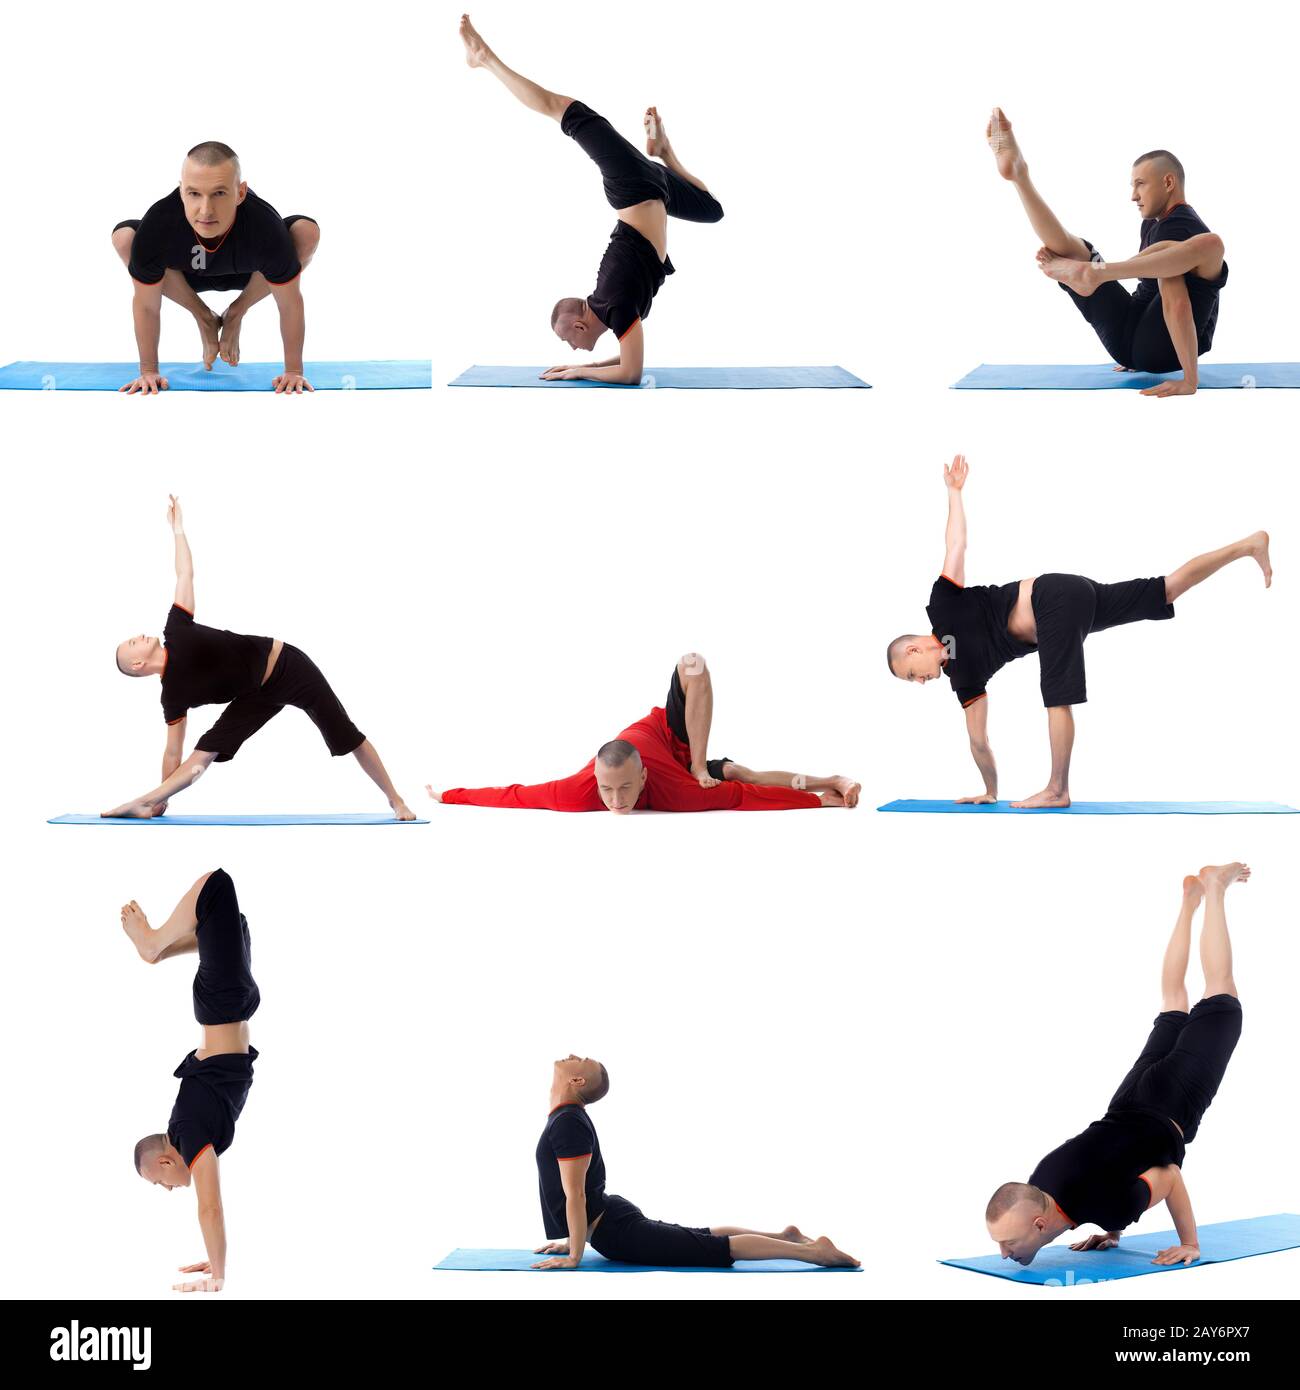 Yoga Day 2017: 5 Yoga Poses To Prevent Erectile Dysfunction